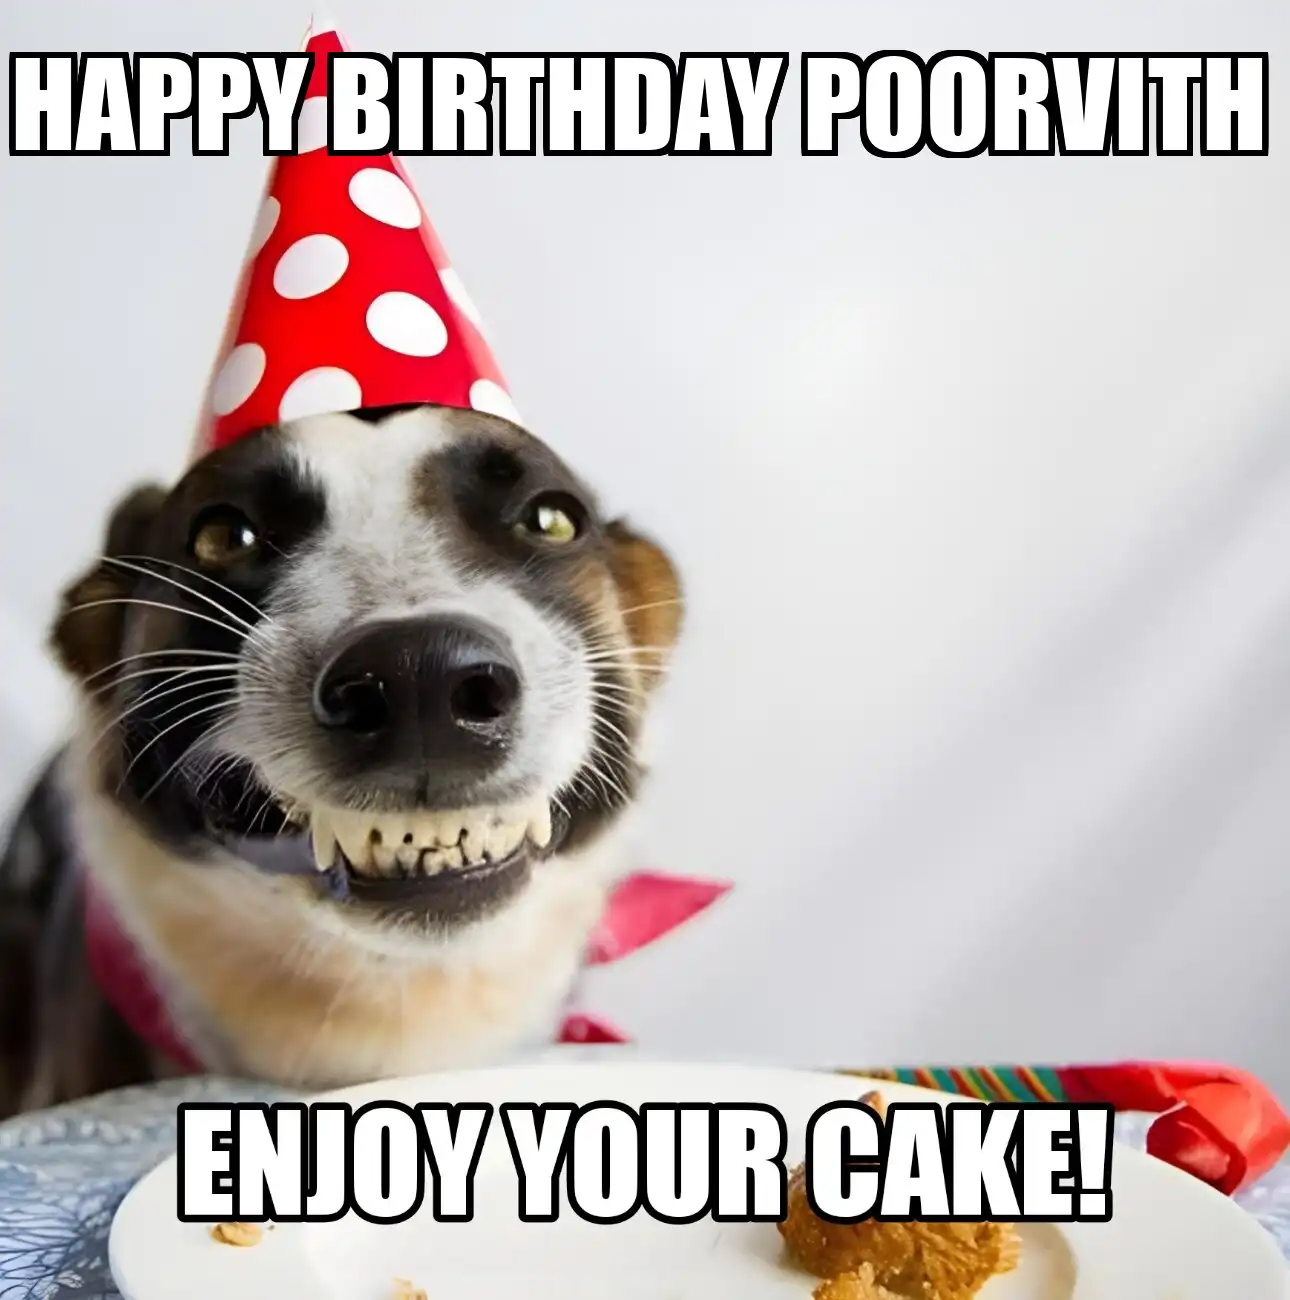 Happy Birthday Poorvith Enjoy Your Cake Dog Meme